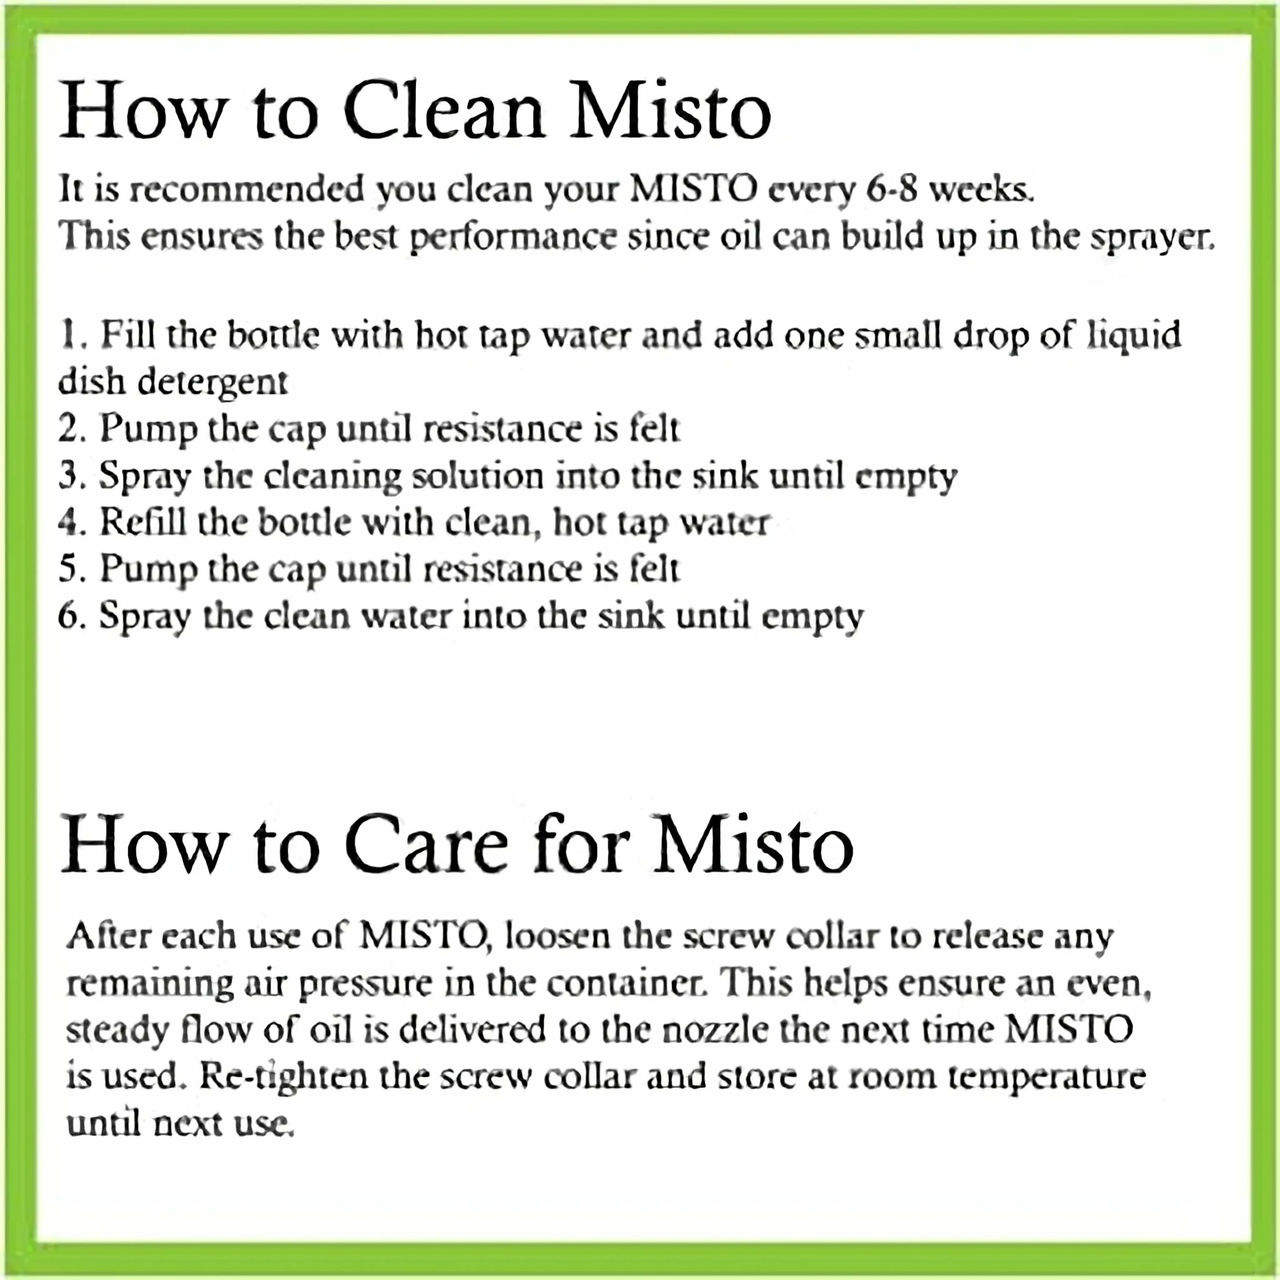 Misto Sprayer Care for Instructions Card